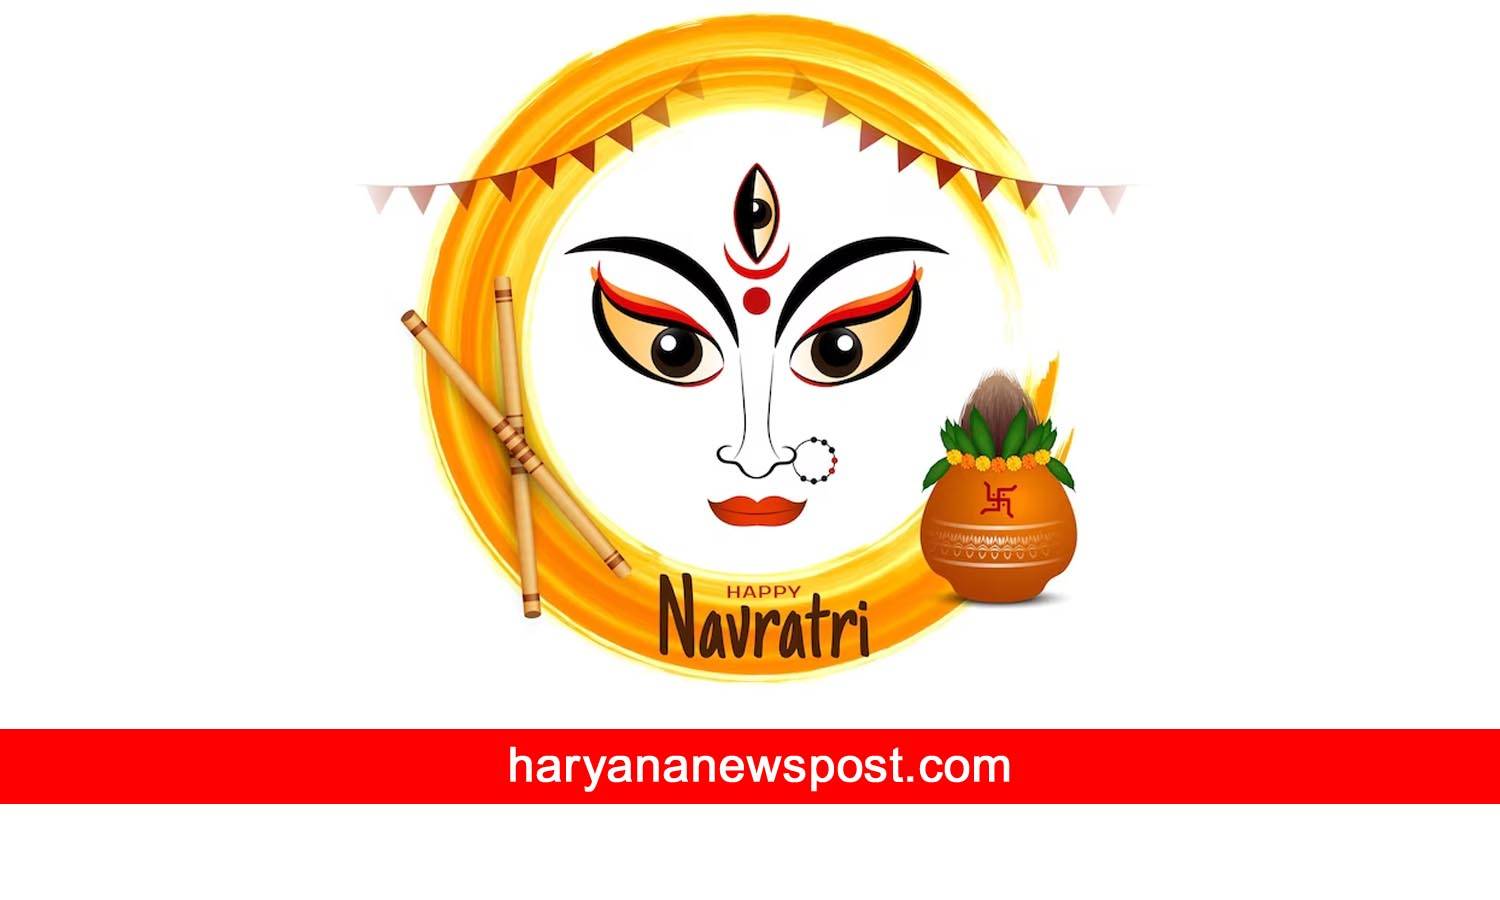 Shubh Shardiya Navratri Wishes to Husband - Navratri Greetings Messages Hindi, English